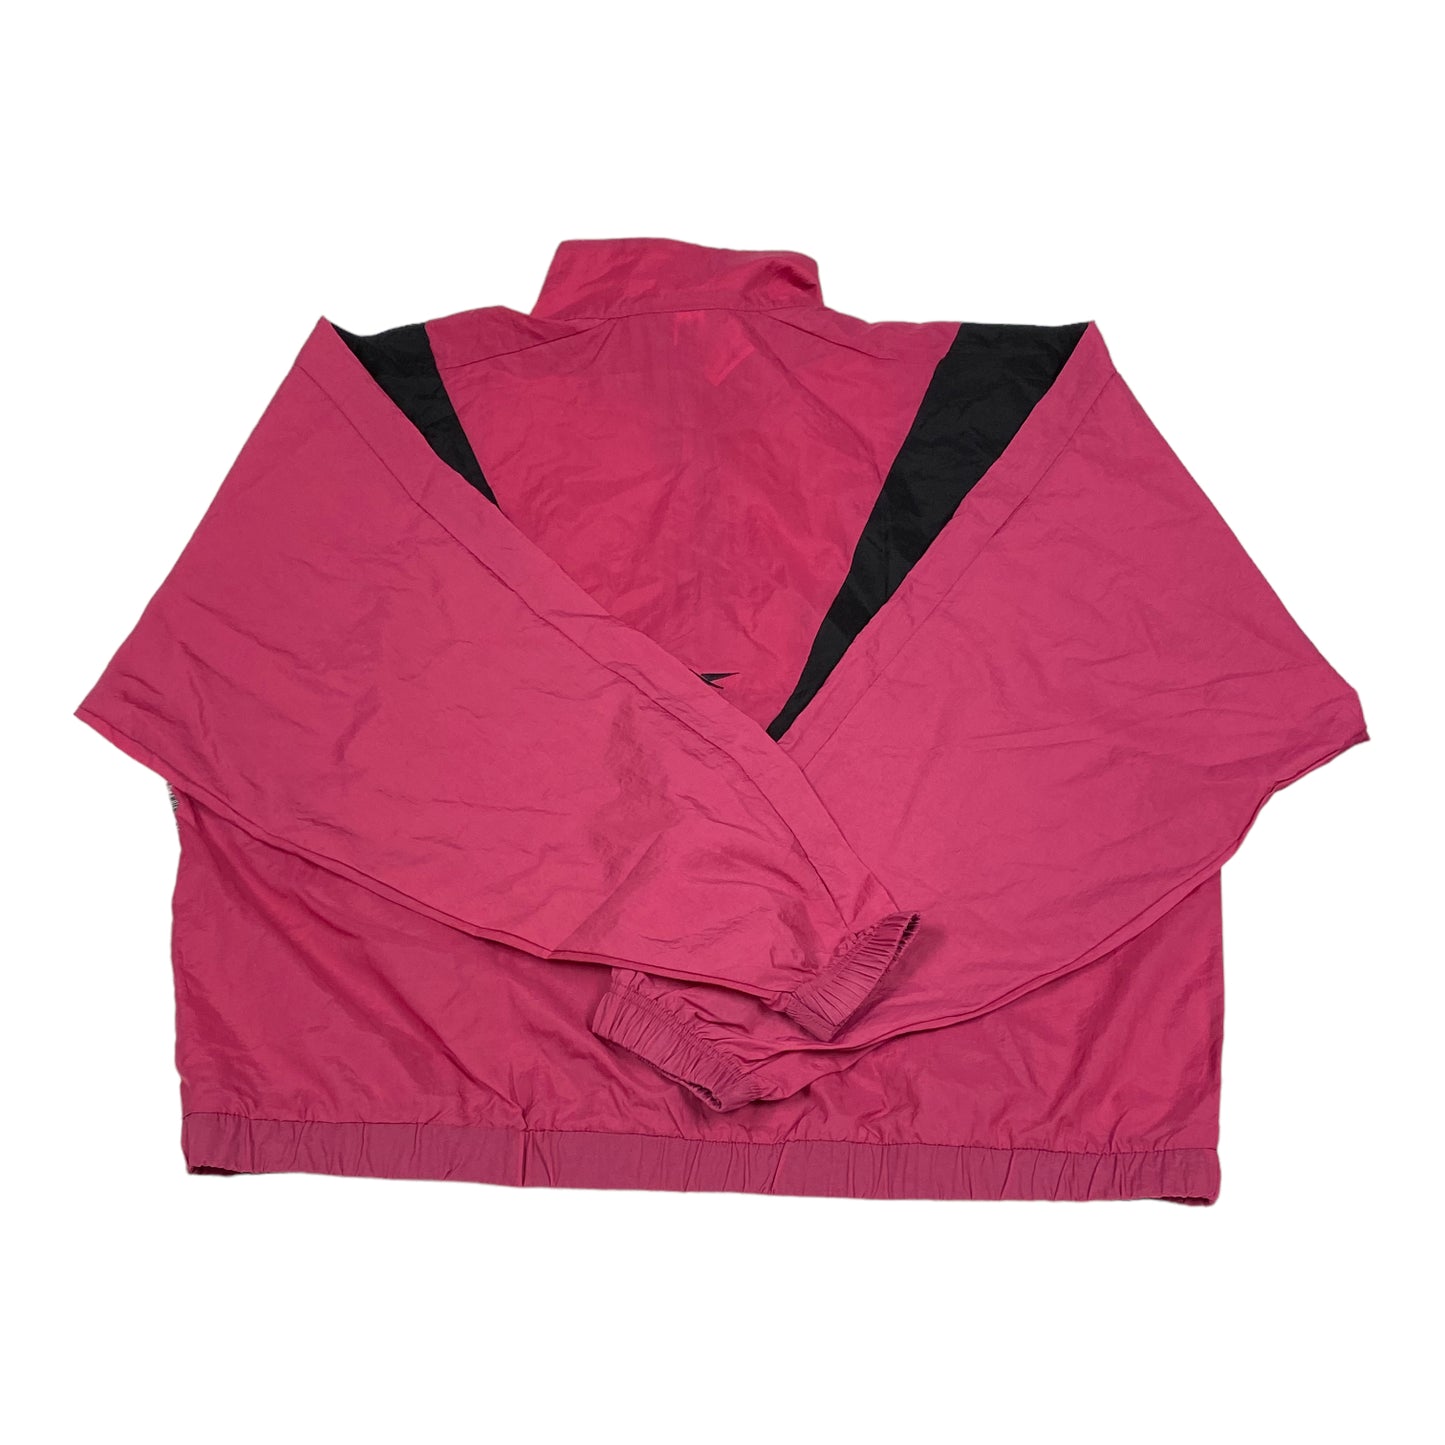 Athletic Jacket By Reebok  Size: Xl